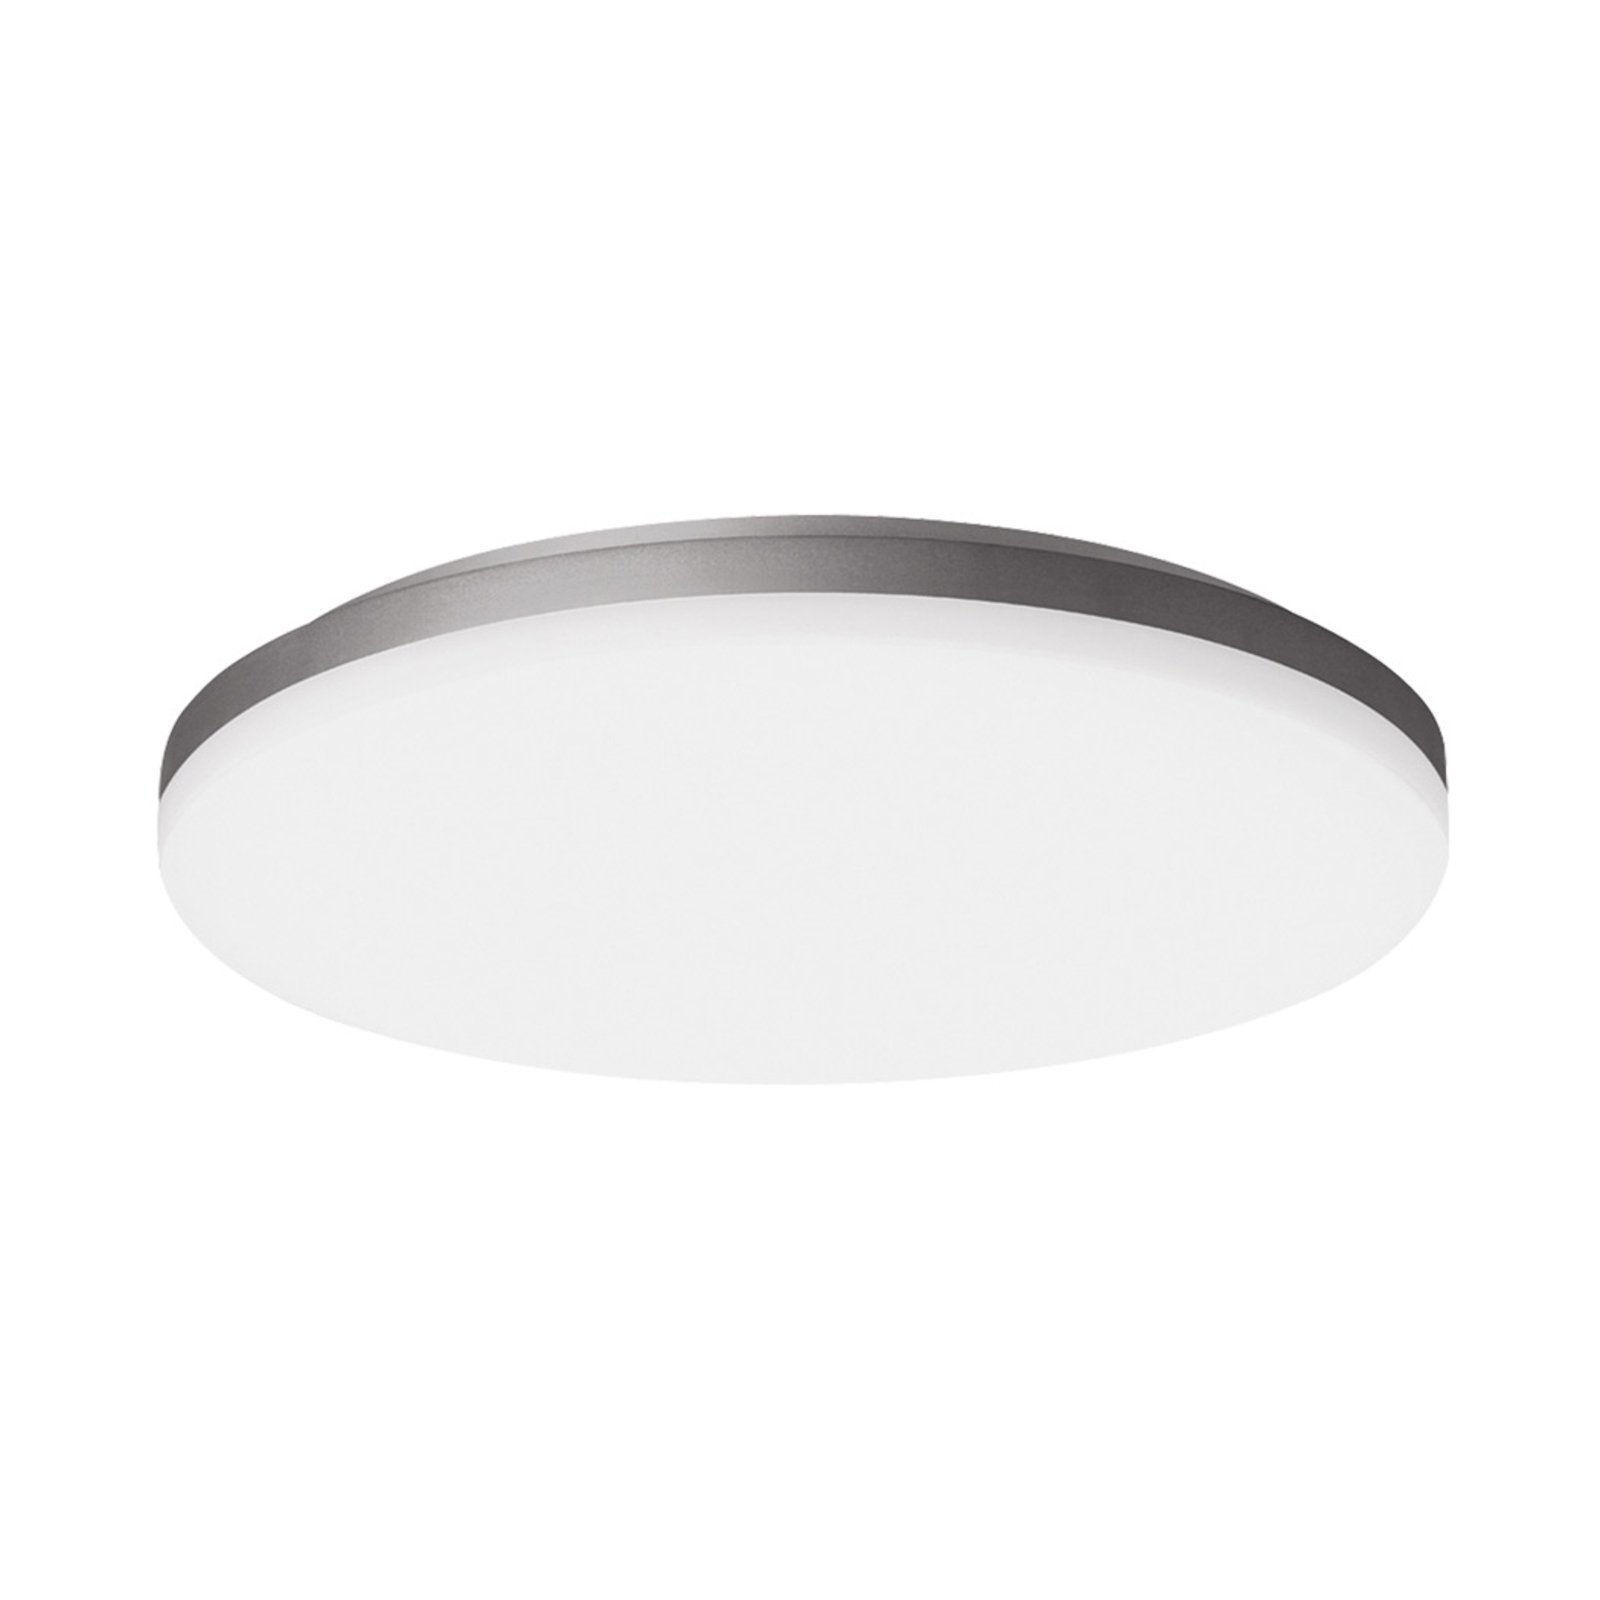 LED ceiling light WL220 round plastic 15W Ø22cm